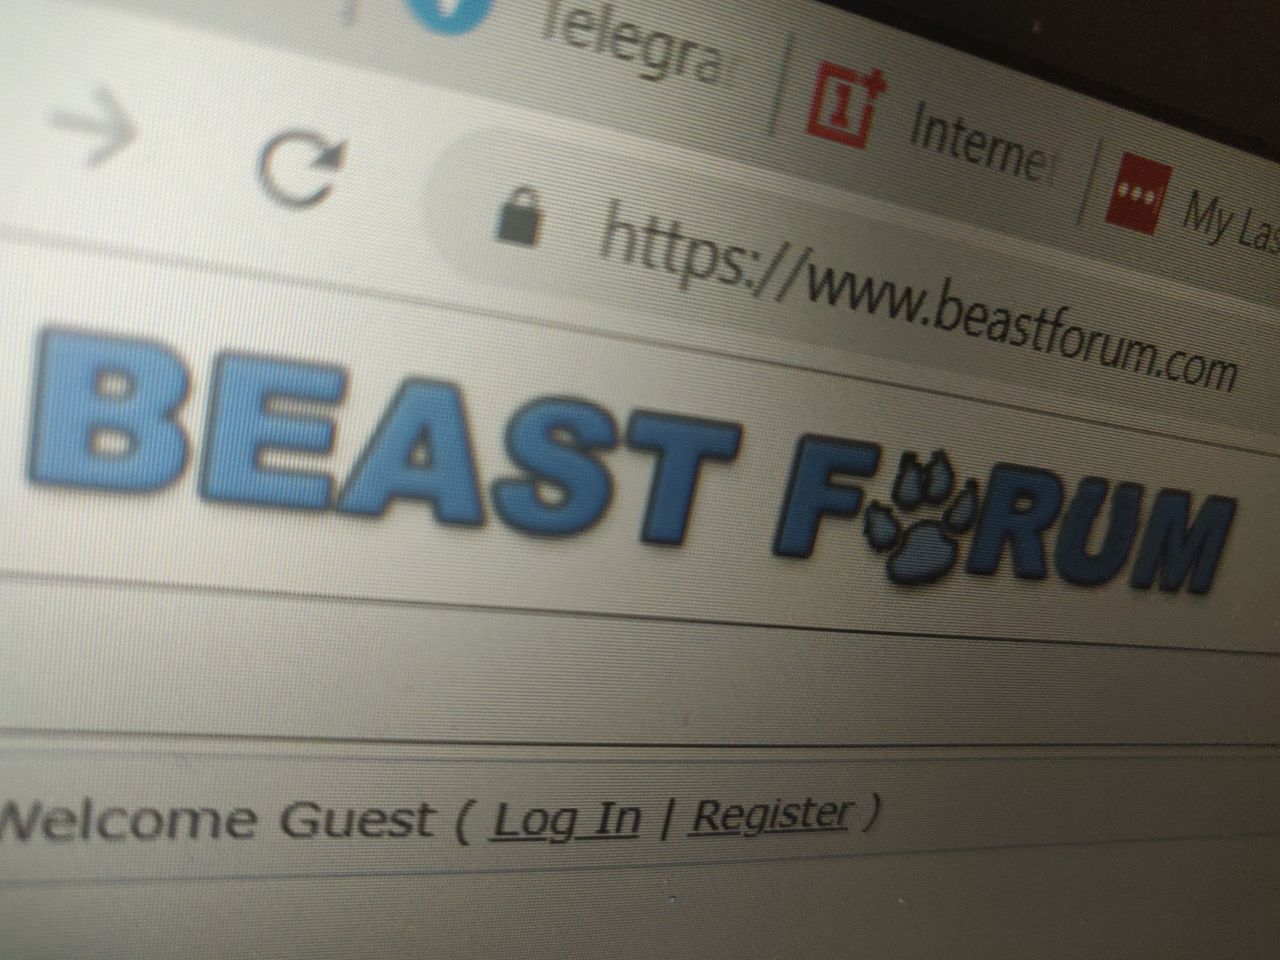 BeastForum, world's premier bestiality website, is shutting down (Gaybeast  and other associated sites too) - PiunikaWeb